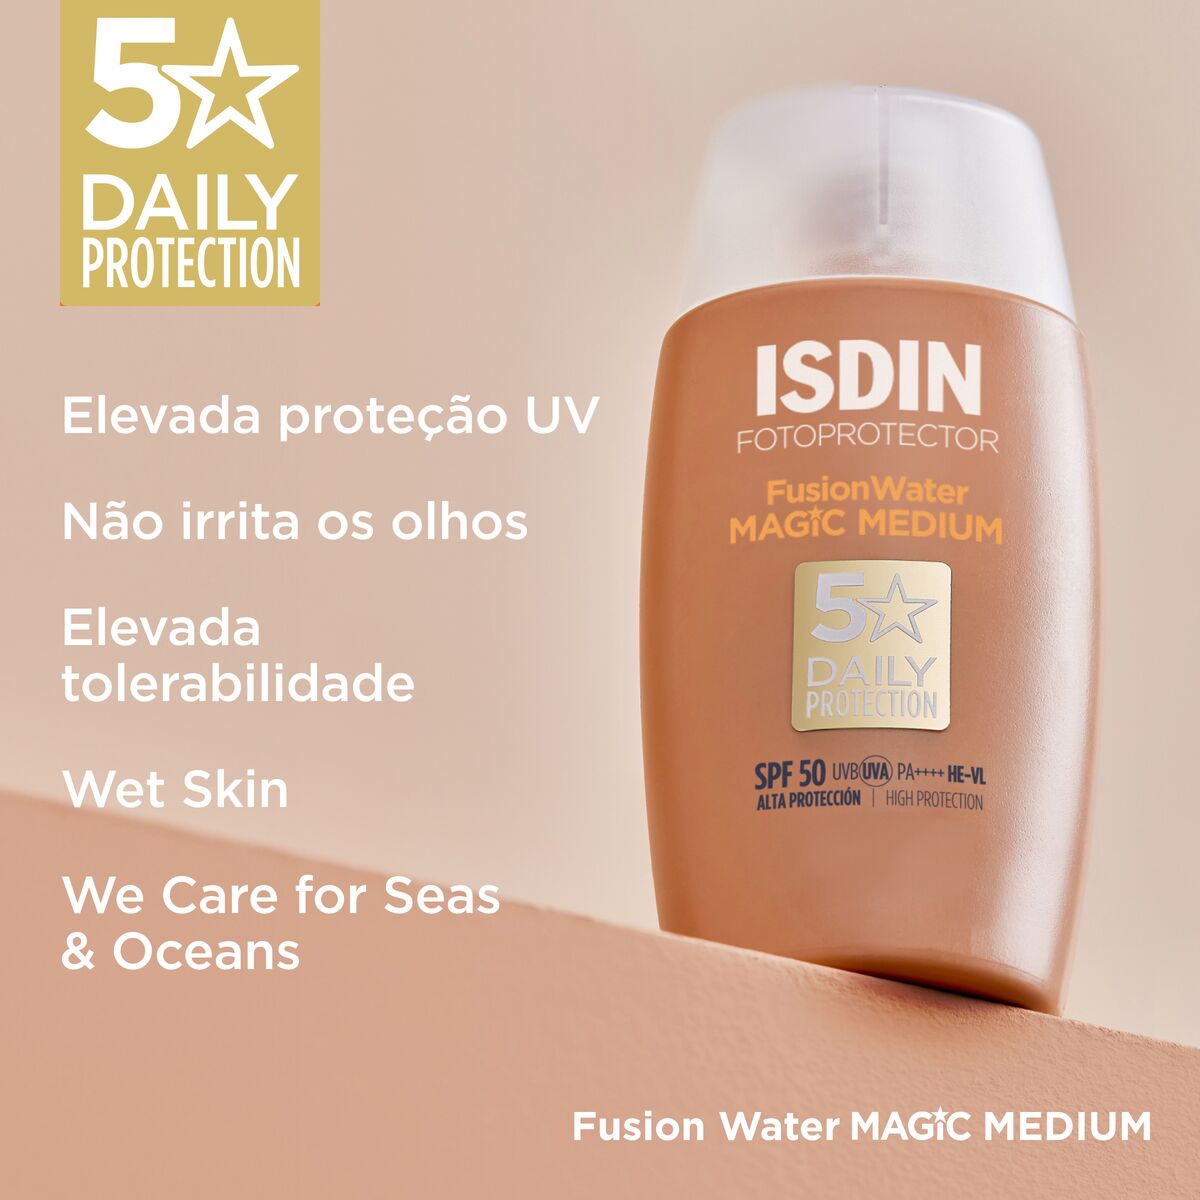 ISDIN Fotoprotetor Fusion Water MAGIC Medium SPF 50